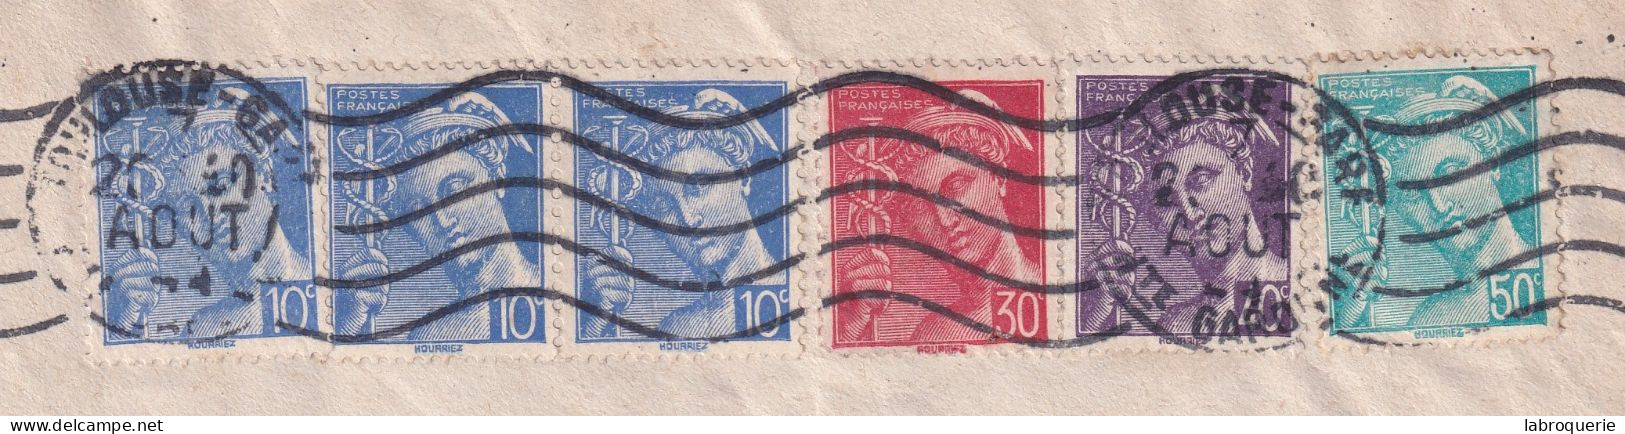 FRA - AFFRANCHISSEMENT "MERCURE" - TARIF DU 5/1/1942 - TOULOUSE > MARSEILLE - Posttarife